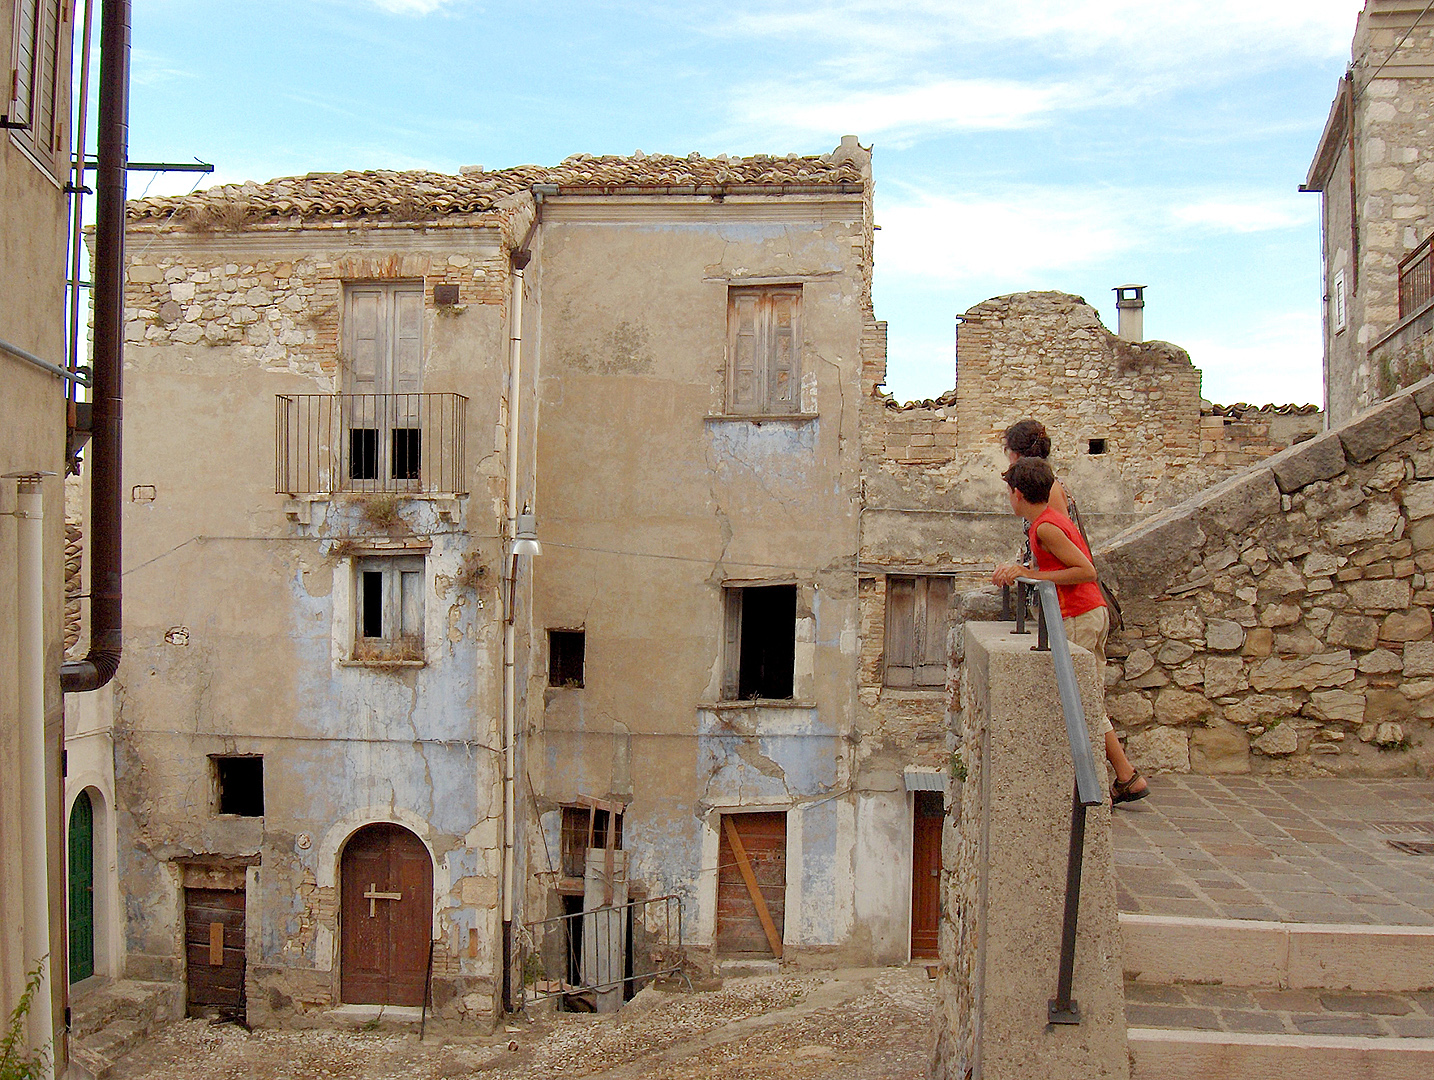 Verlaten huizen (Casoli, Abruzzen); Abandoned houses (Casoli, Abruzzo)